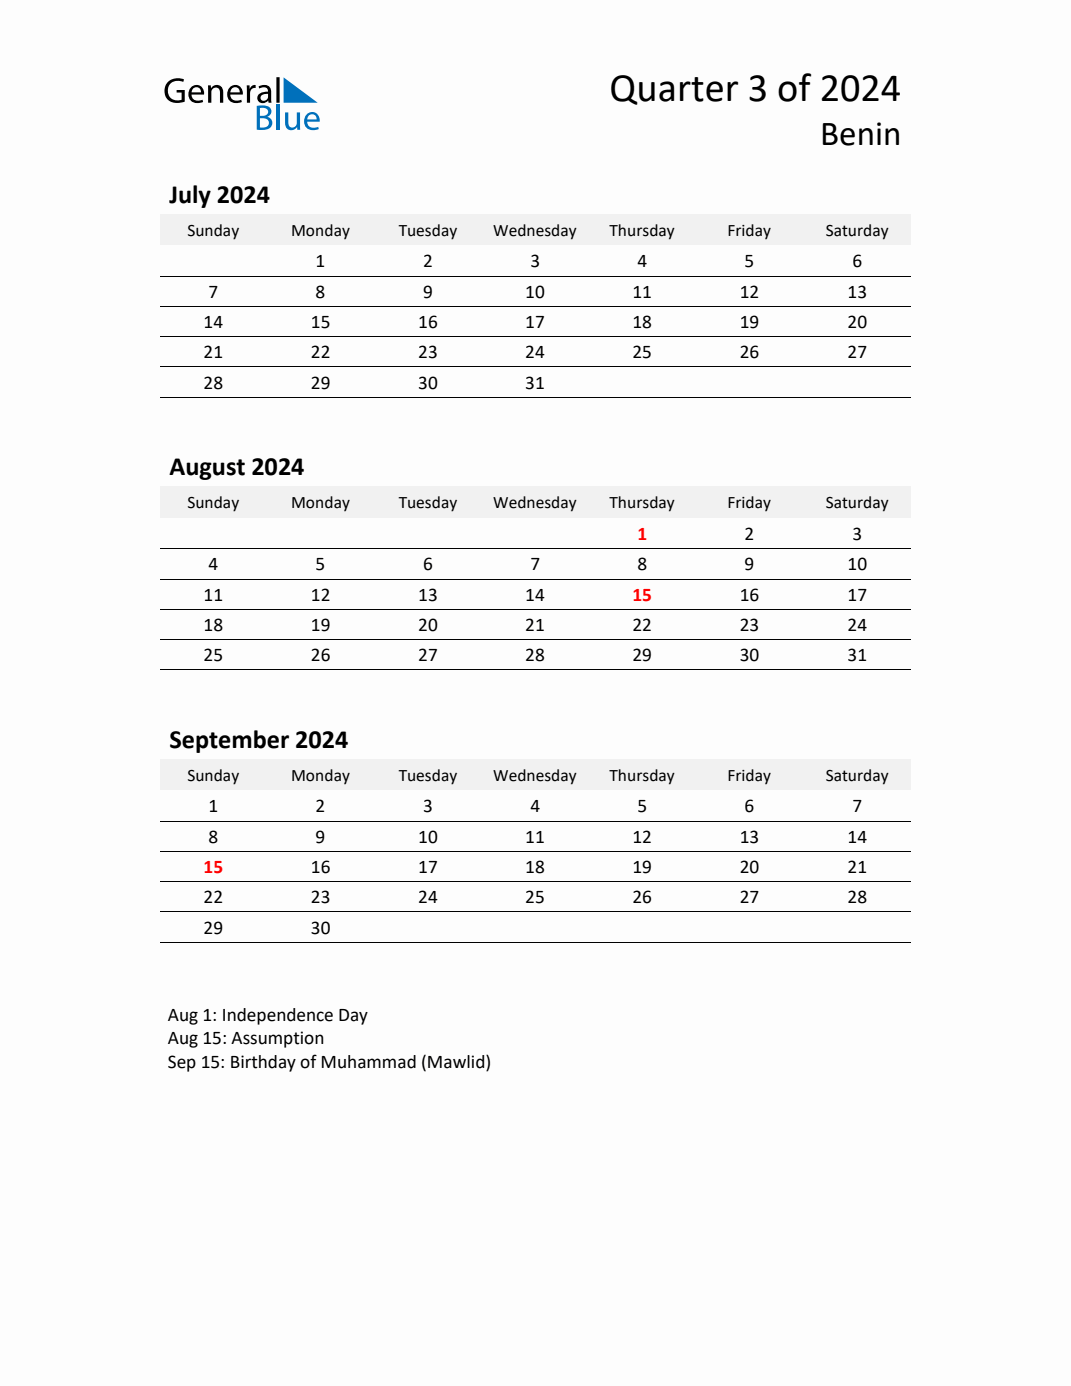 Q3 2024 Quarterly Calendar with Benin Holidays